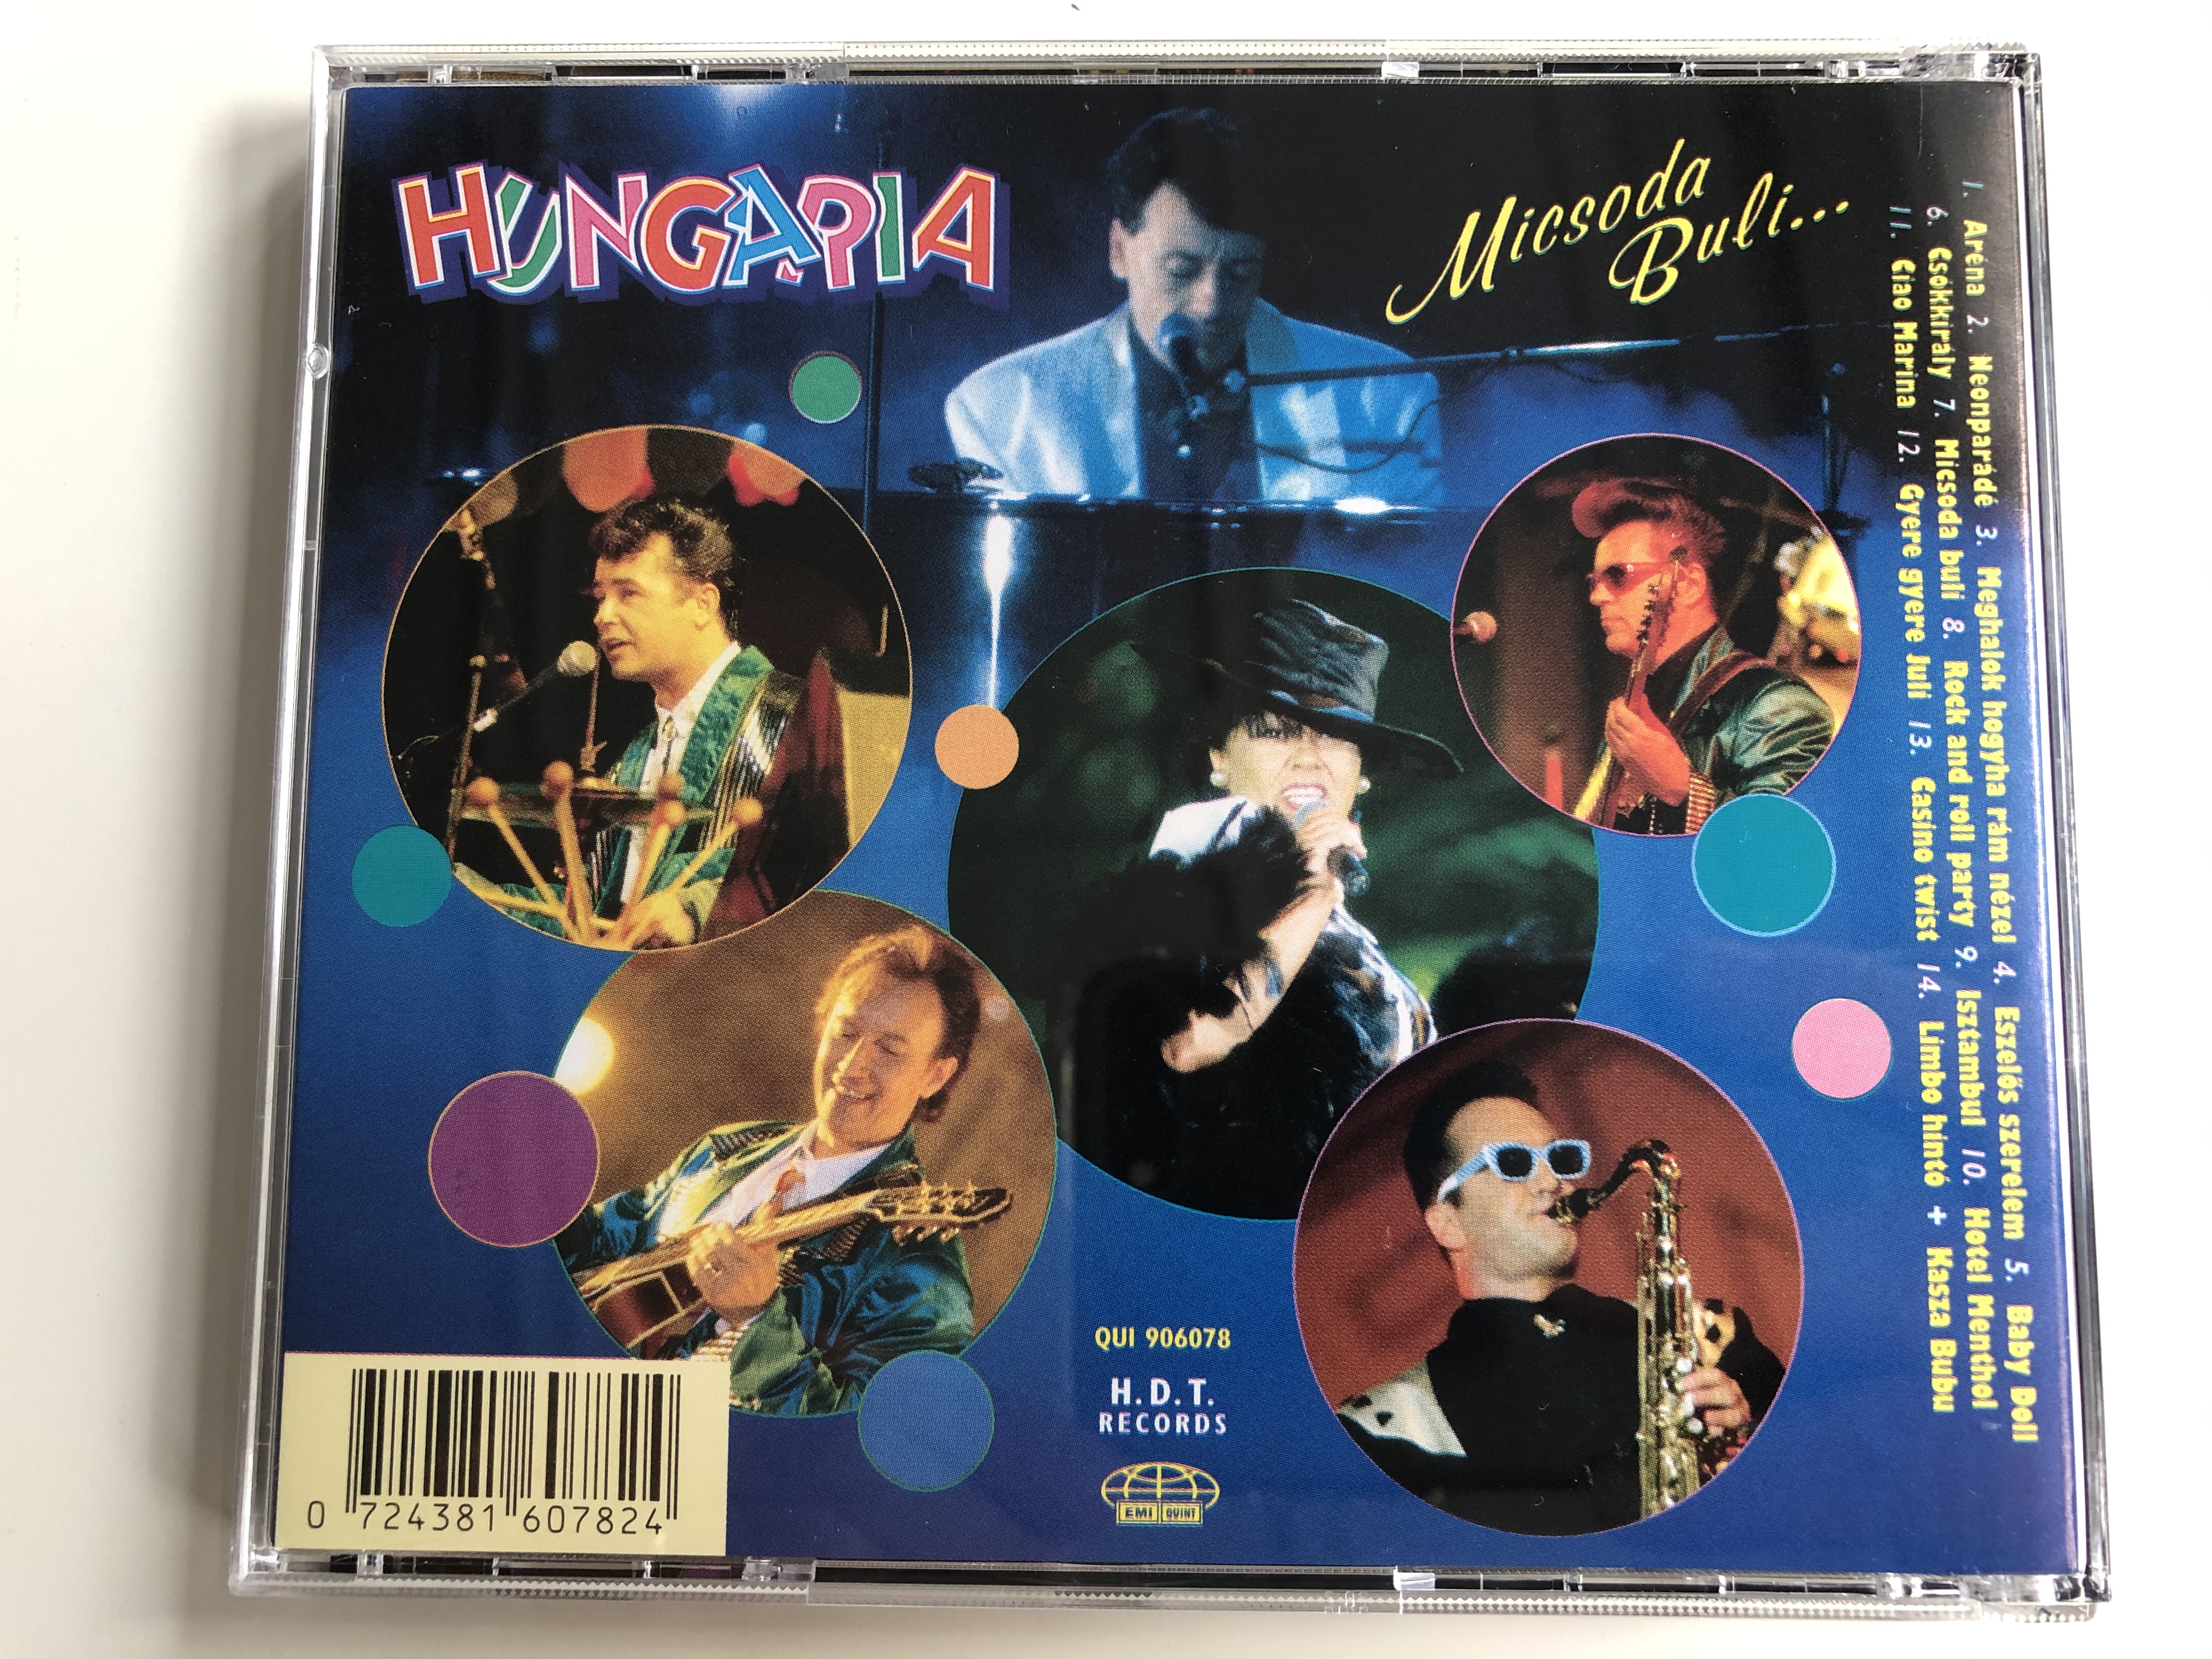 hungaria-micsoda-buli...-n-pstadion-1995-h.d.t.-records-audio-cd-qui-906078-9-.jpg